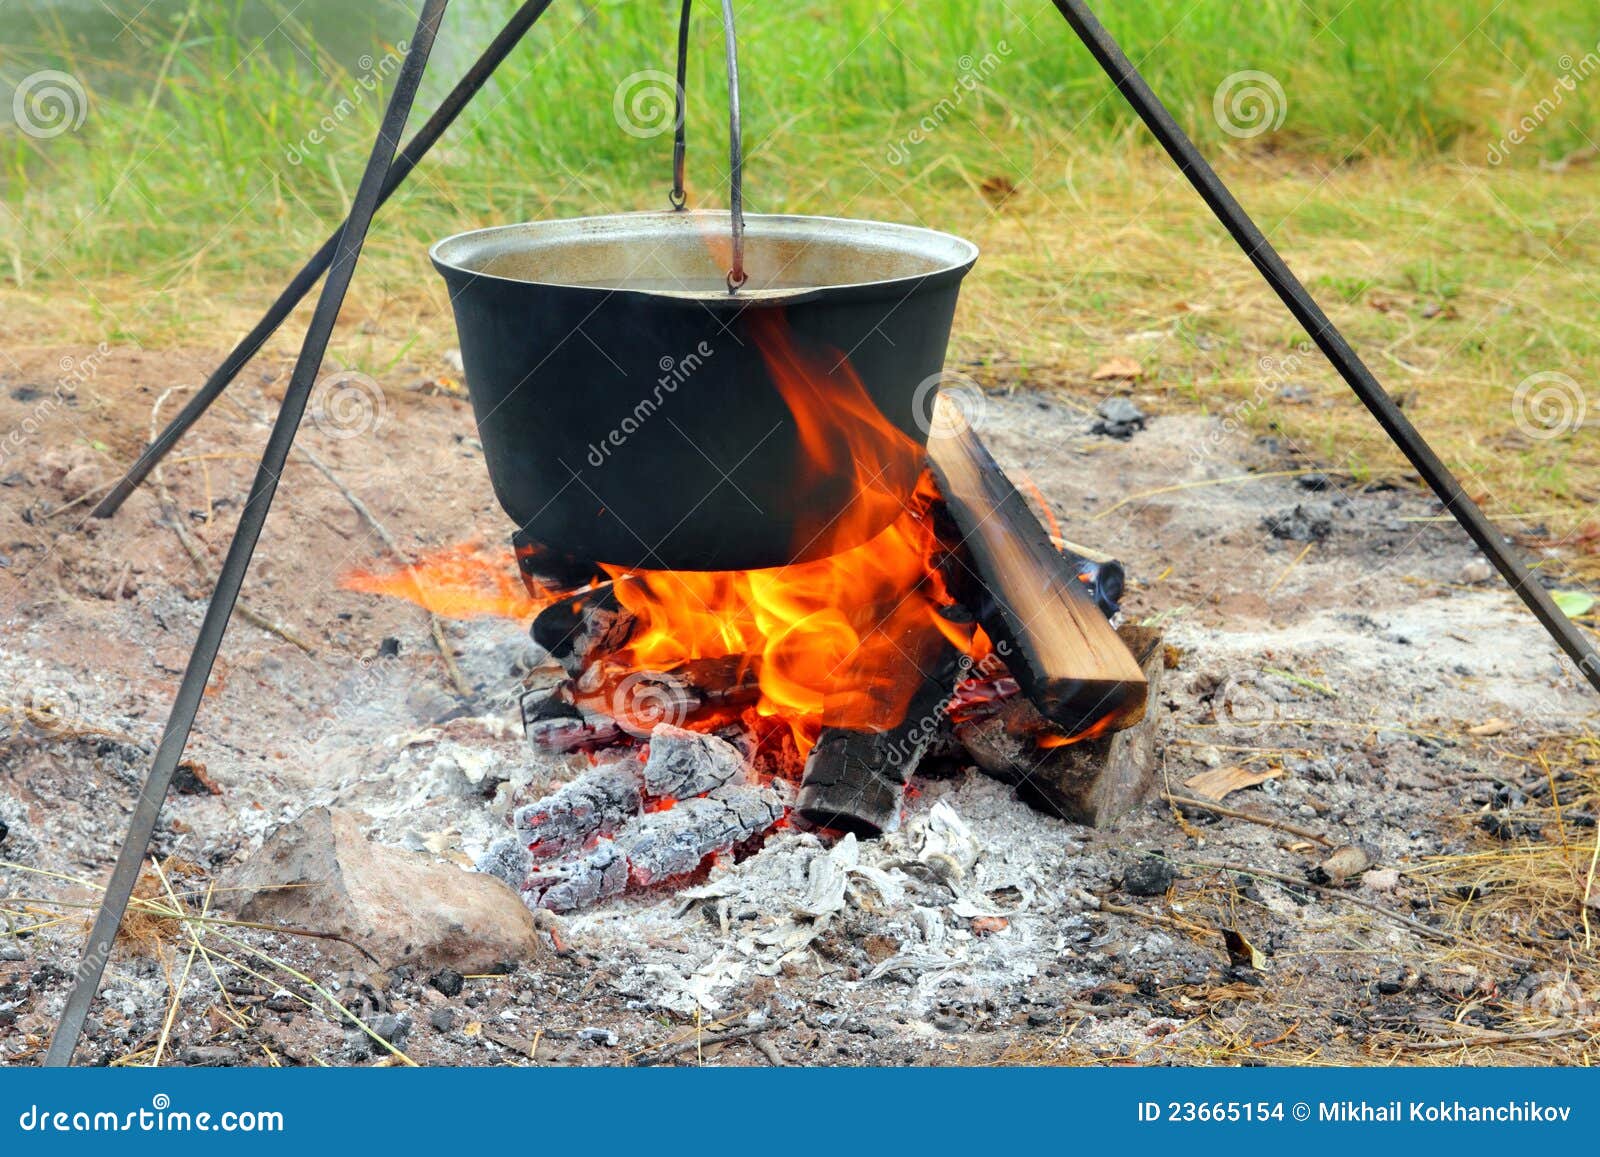 https://thumbs.dreamstime.com/z/kettle-over-campfire-23665154.jpg